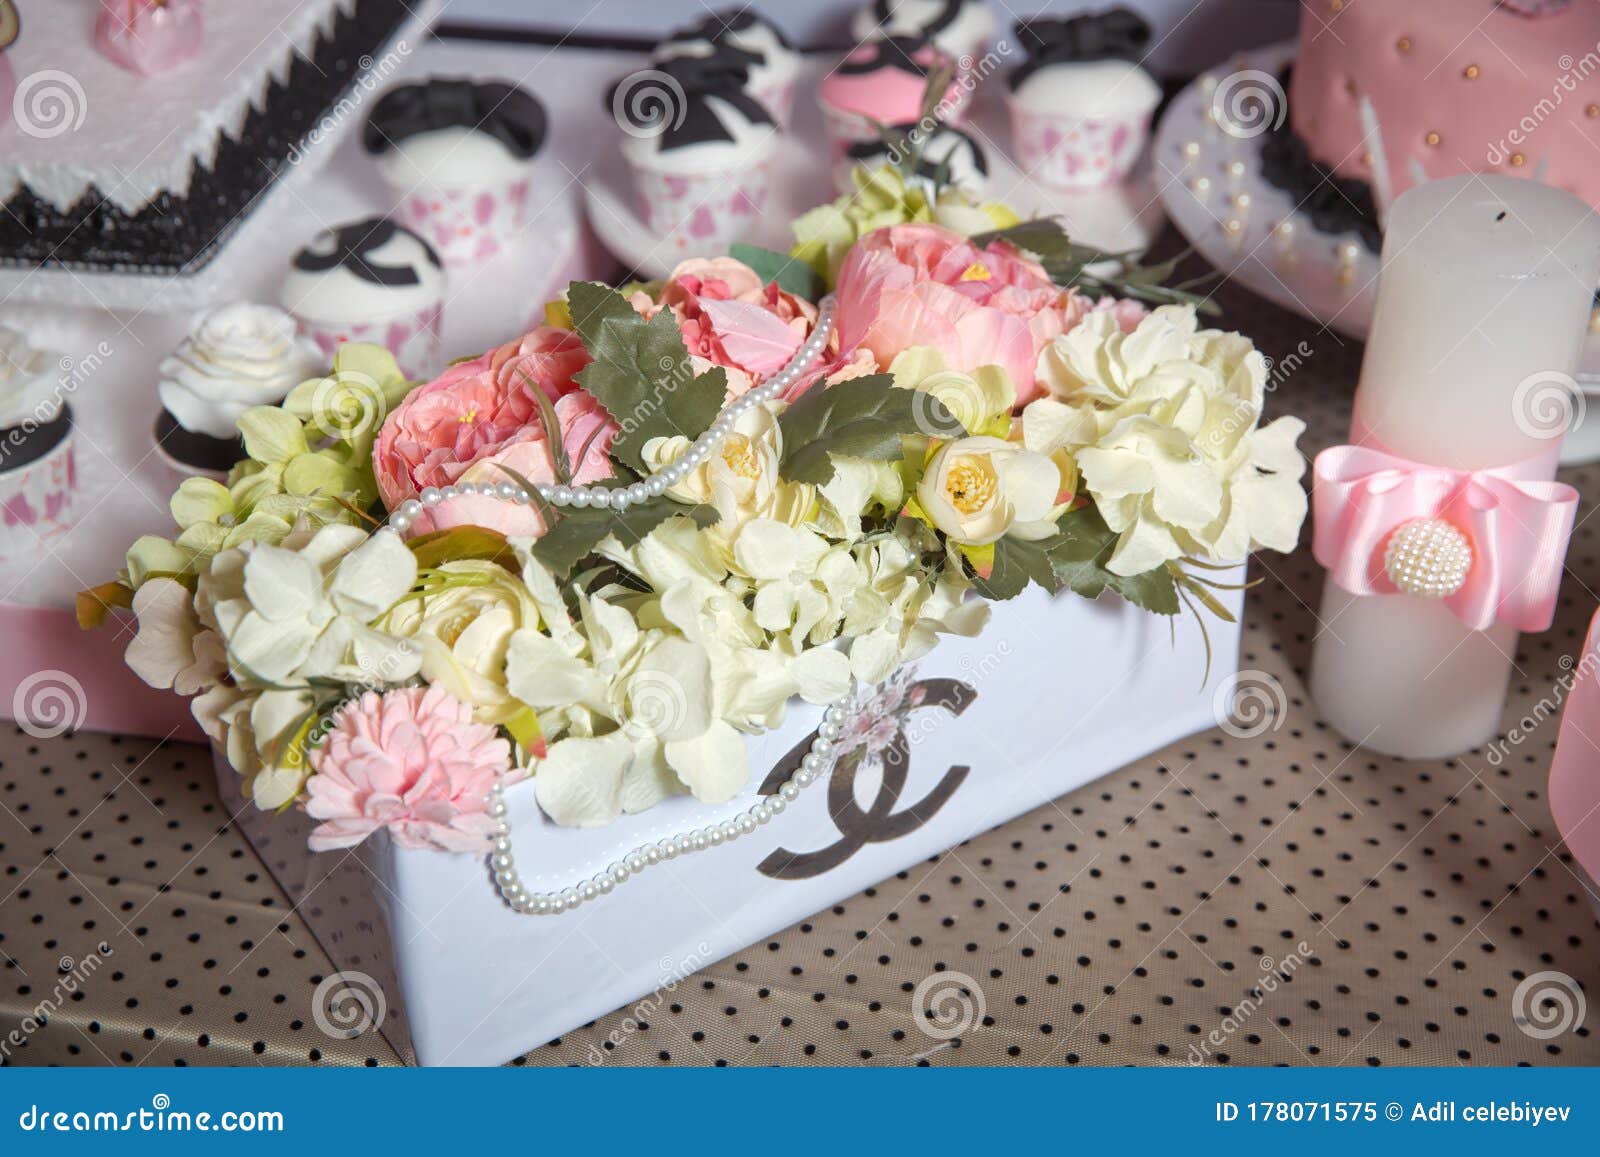 chanel theme customized cake smash candy bar birthday party baku azerbaijan pearls white box artificial pink yellow flowers 178071575